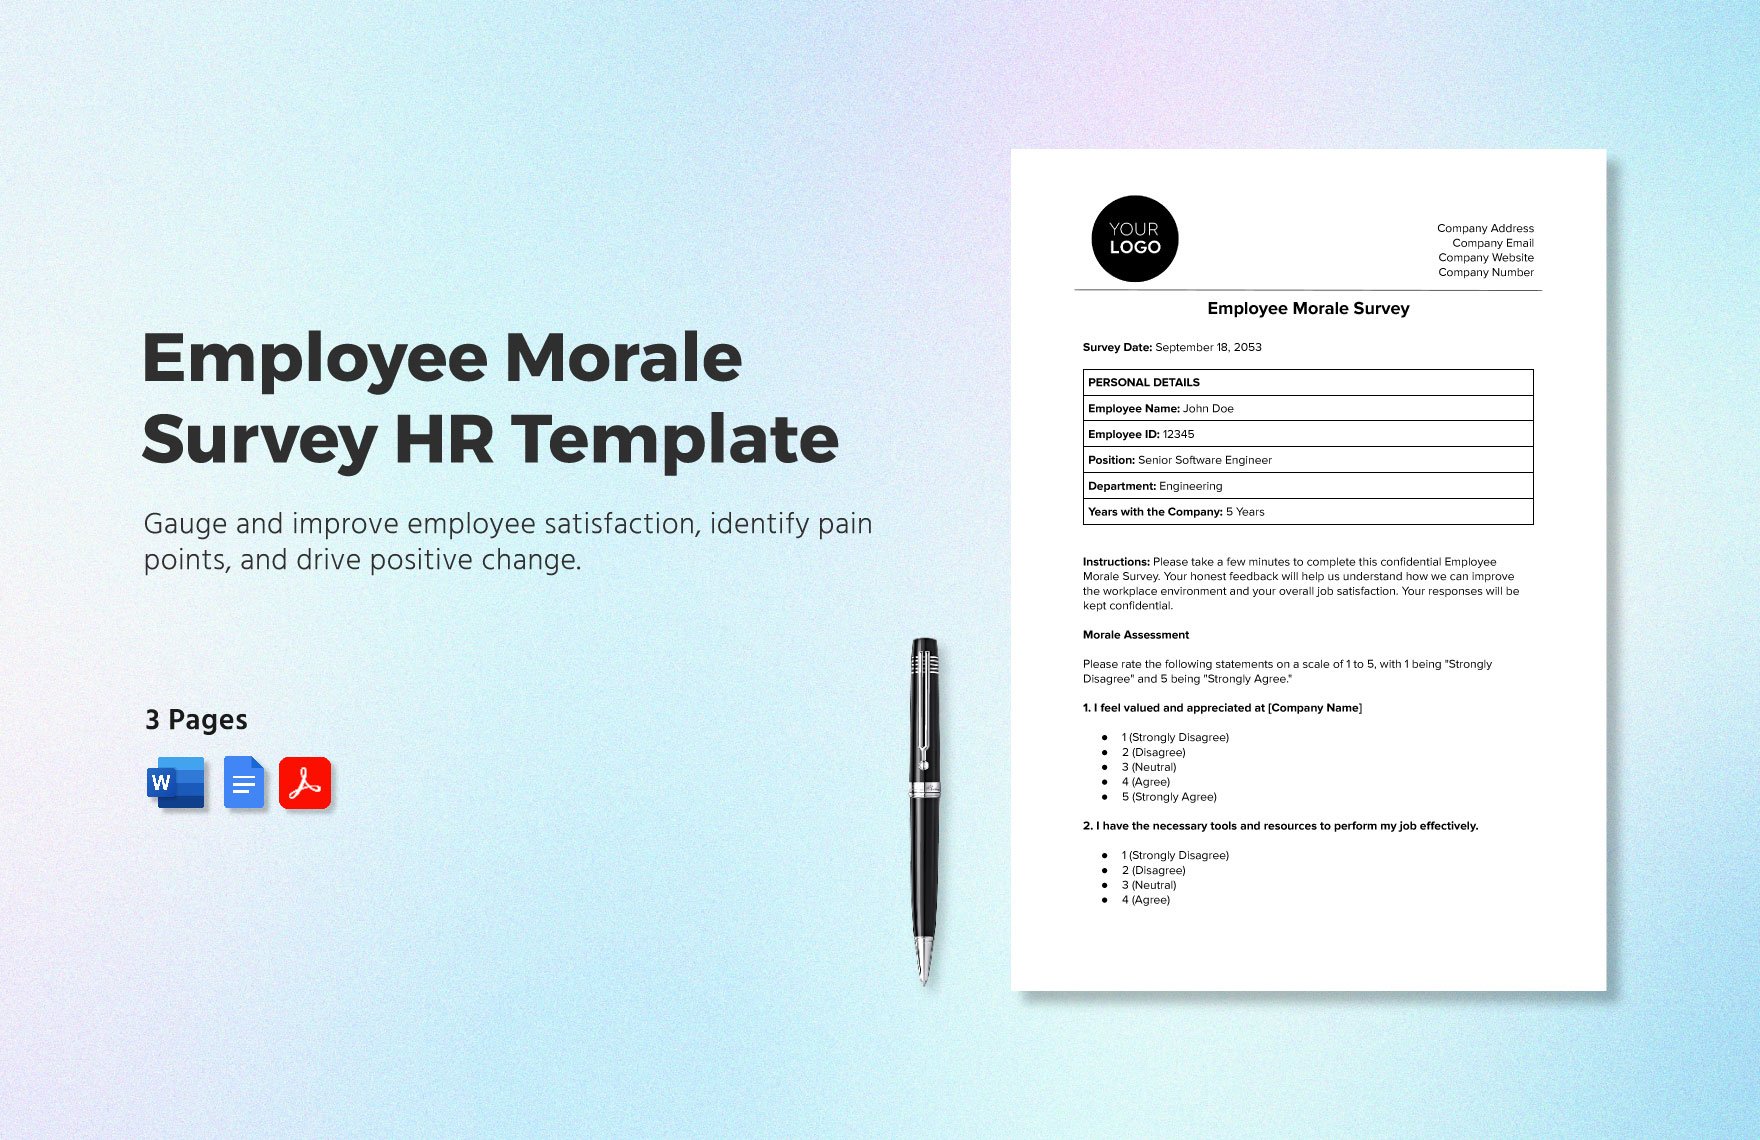 Employee Morale Survey HR Template